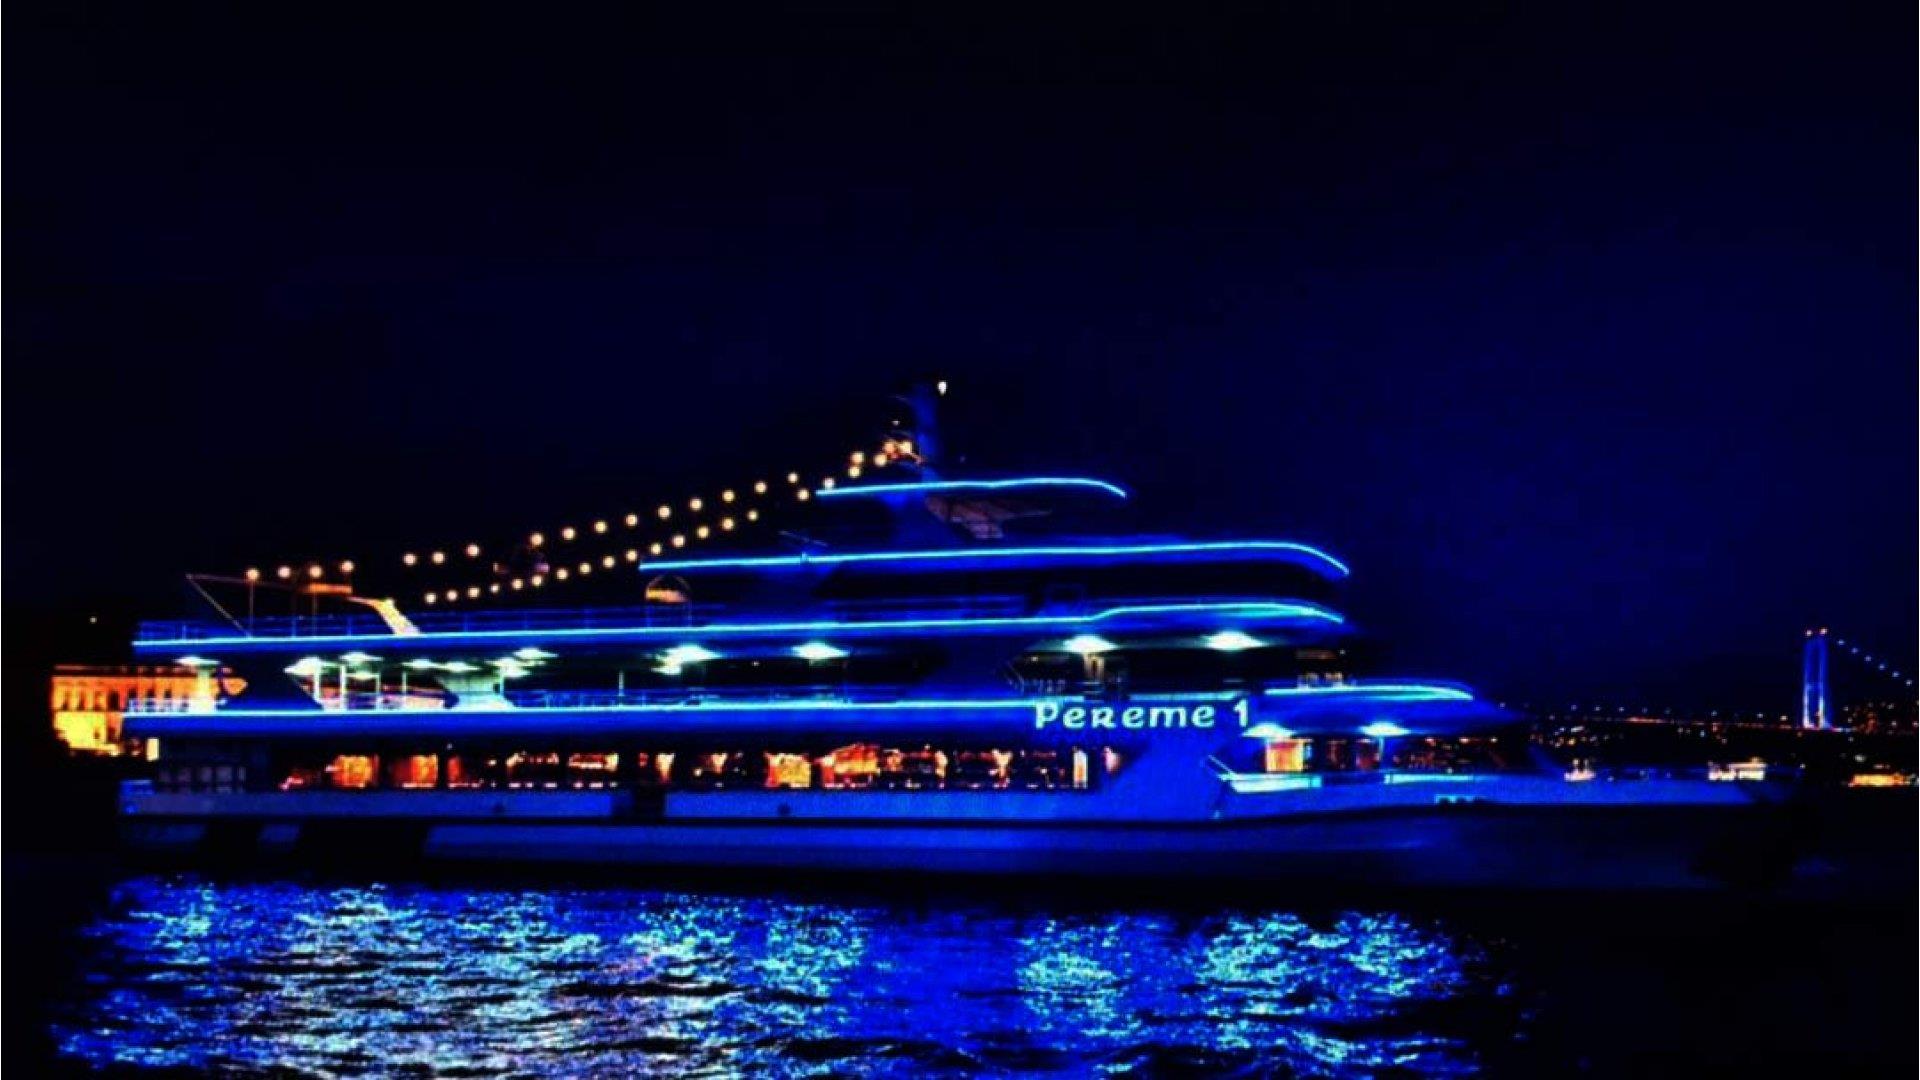 Bosporus cruise dinner show with dinner